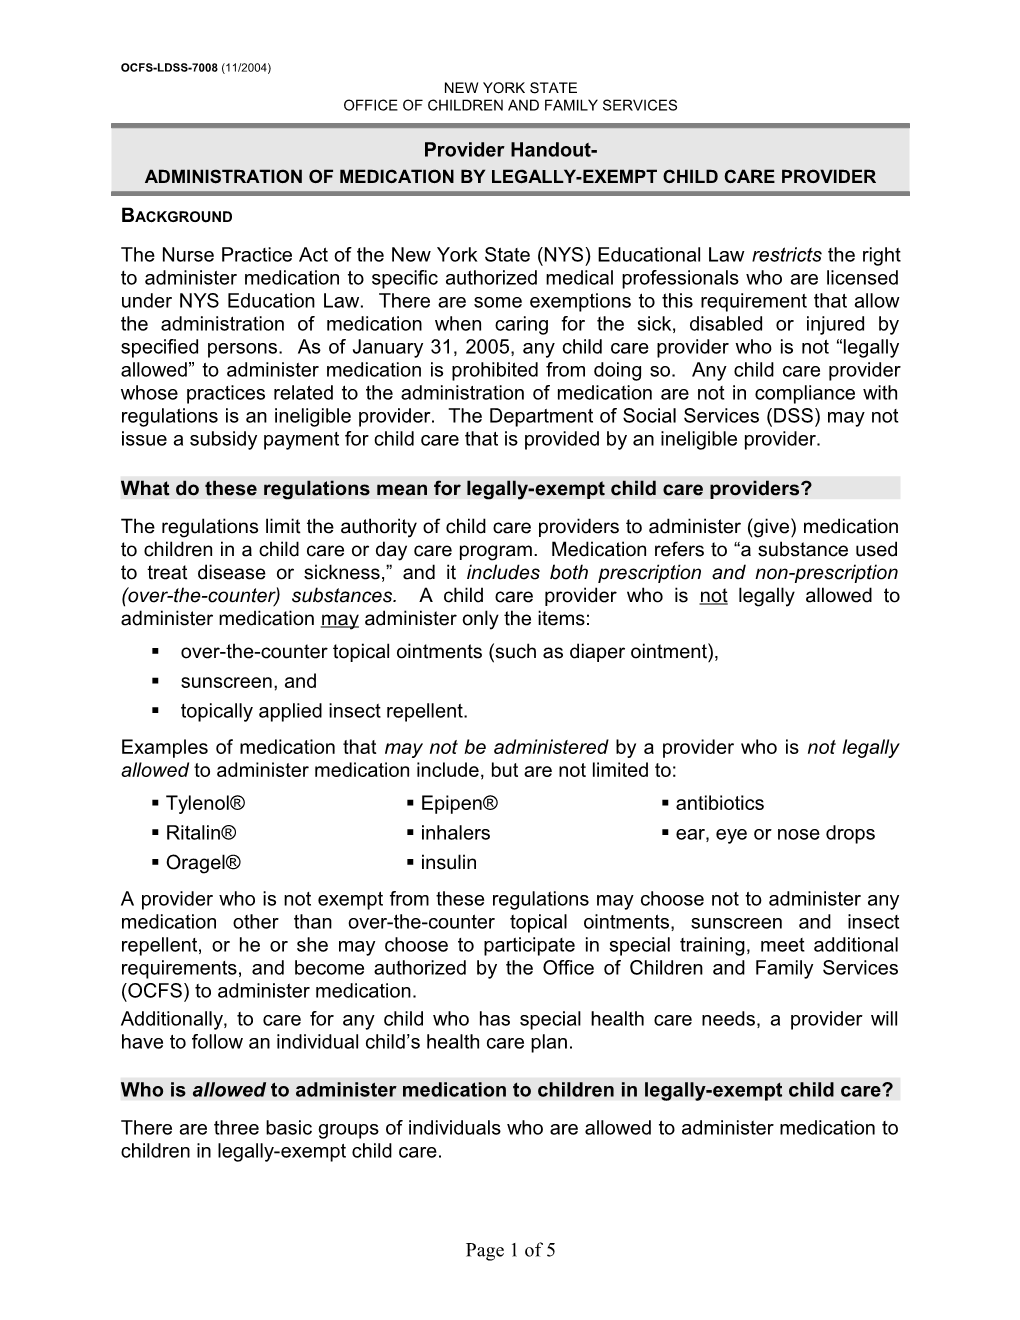 OCFS-LDSS-7008 Provider Handout - Administration of Medication by Legally Exempt Child